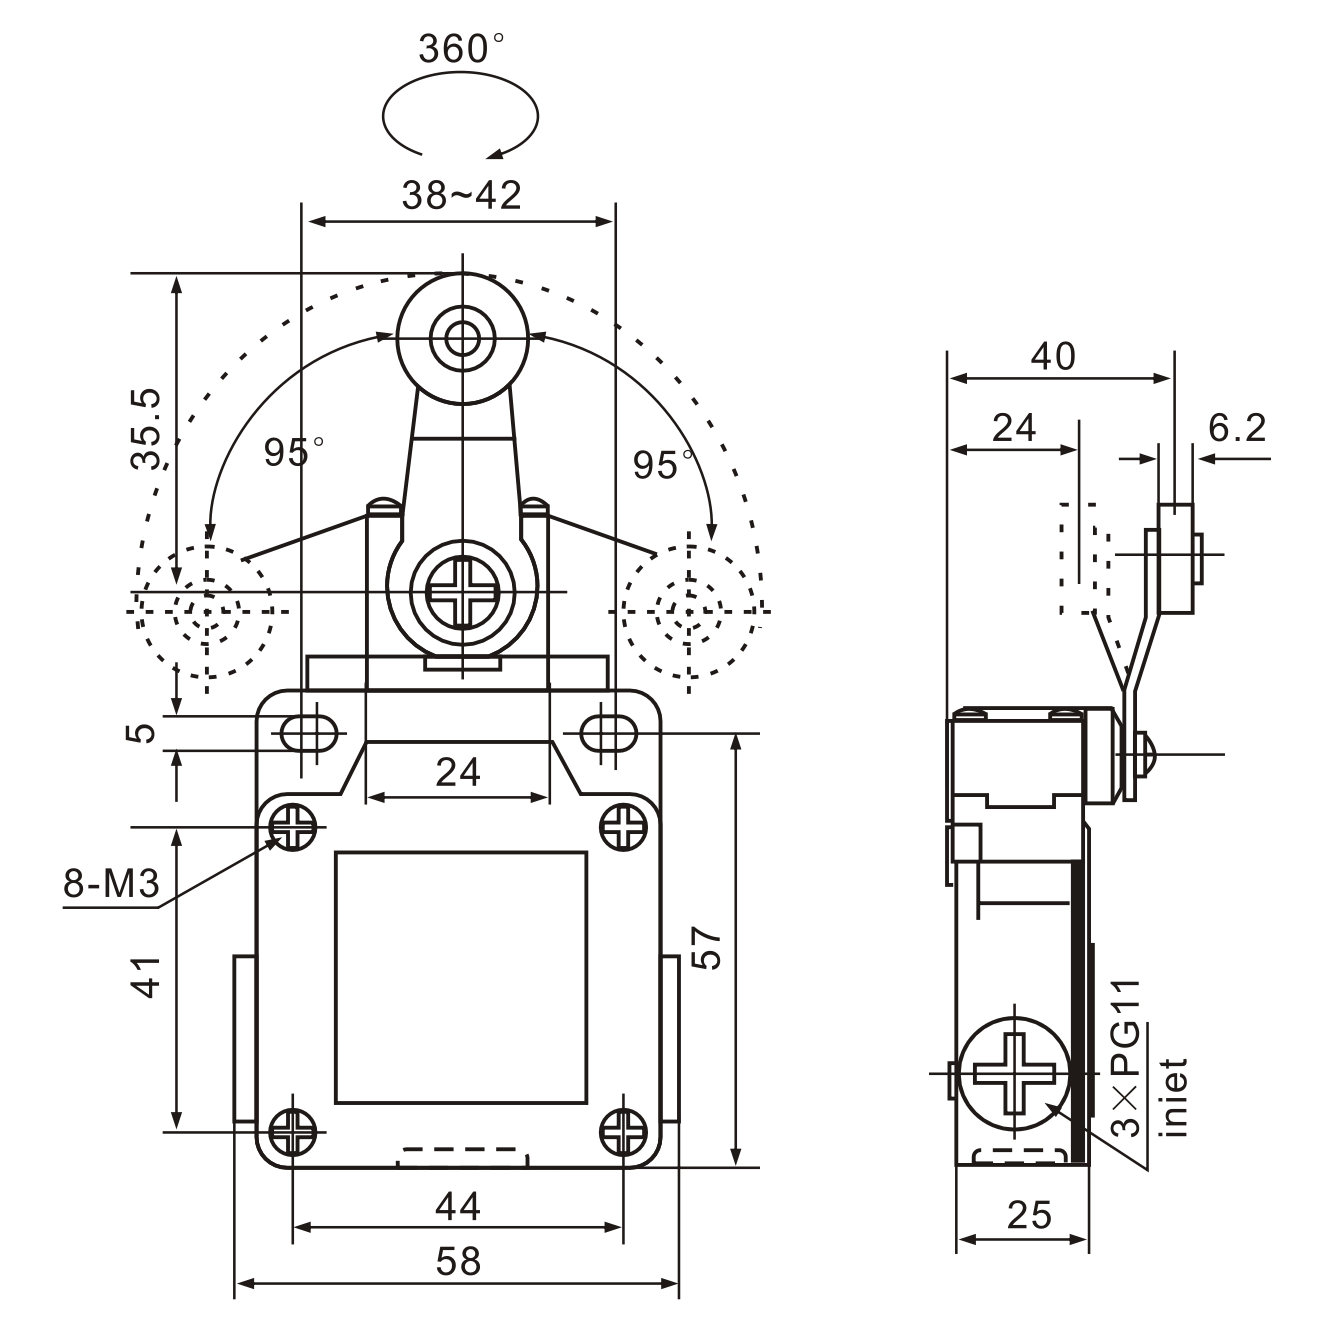 XCK-M115 Roller Lever Limit Switch Diagram